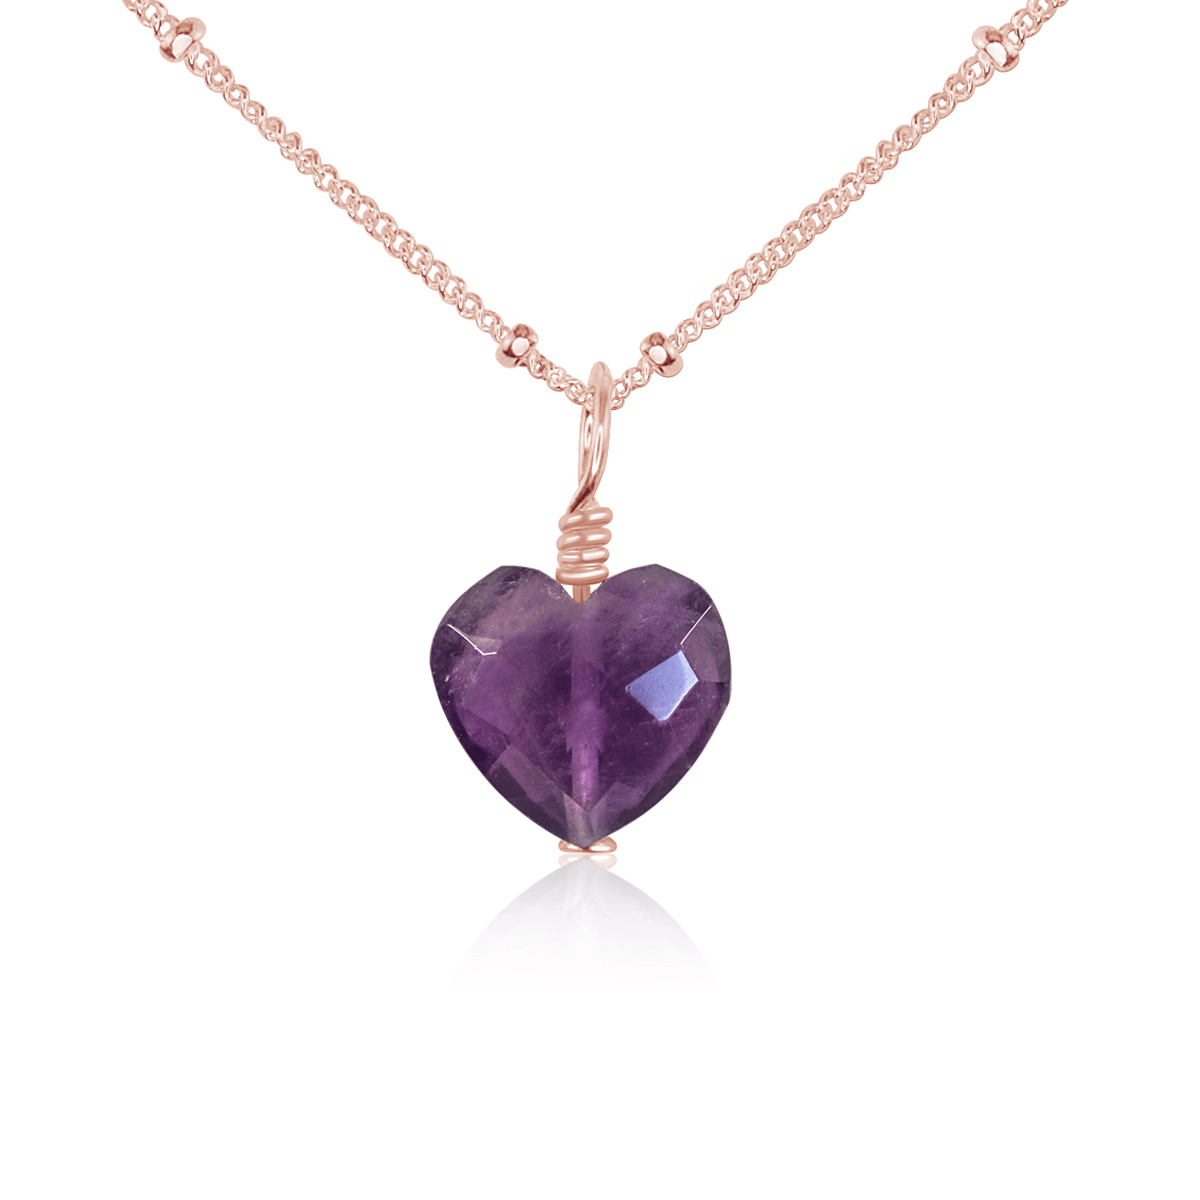 Amethyst Crystal Heart Pendant Necklace - Amethyst Crystal Heart Pendant Necklace - 14k Rose Gold Fill / Satellite - Luna Tide Handmade Crystal Jewellery